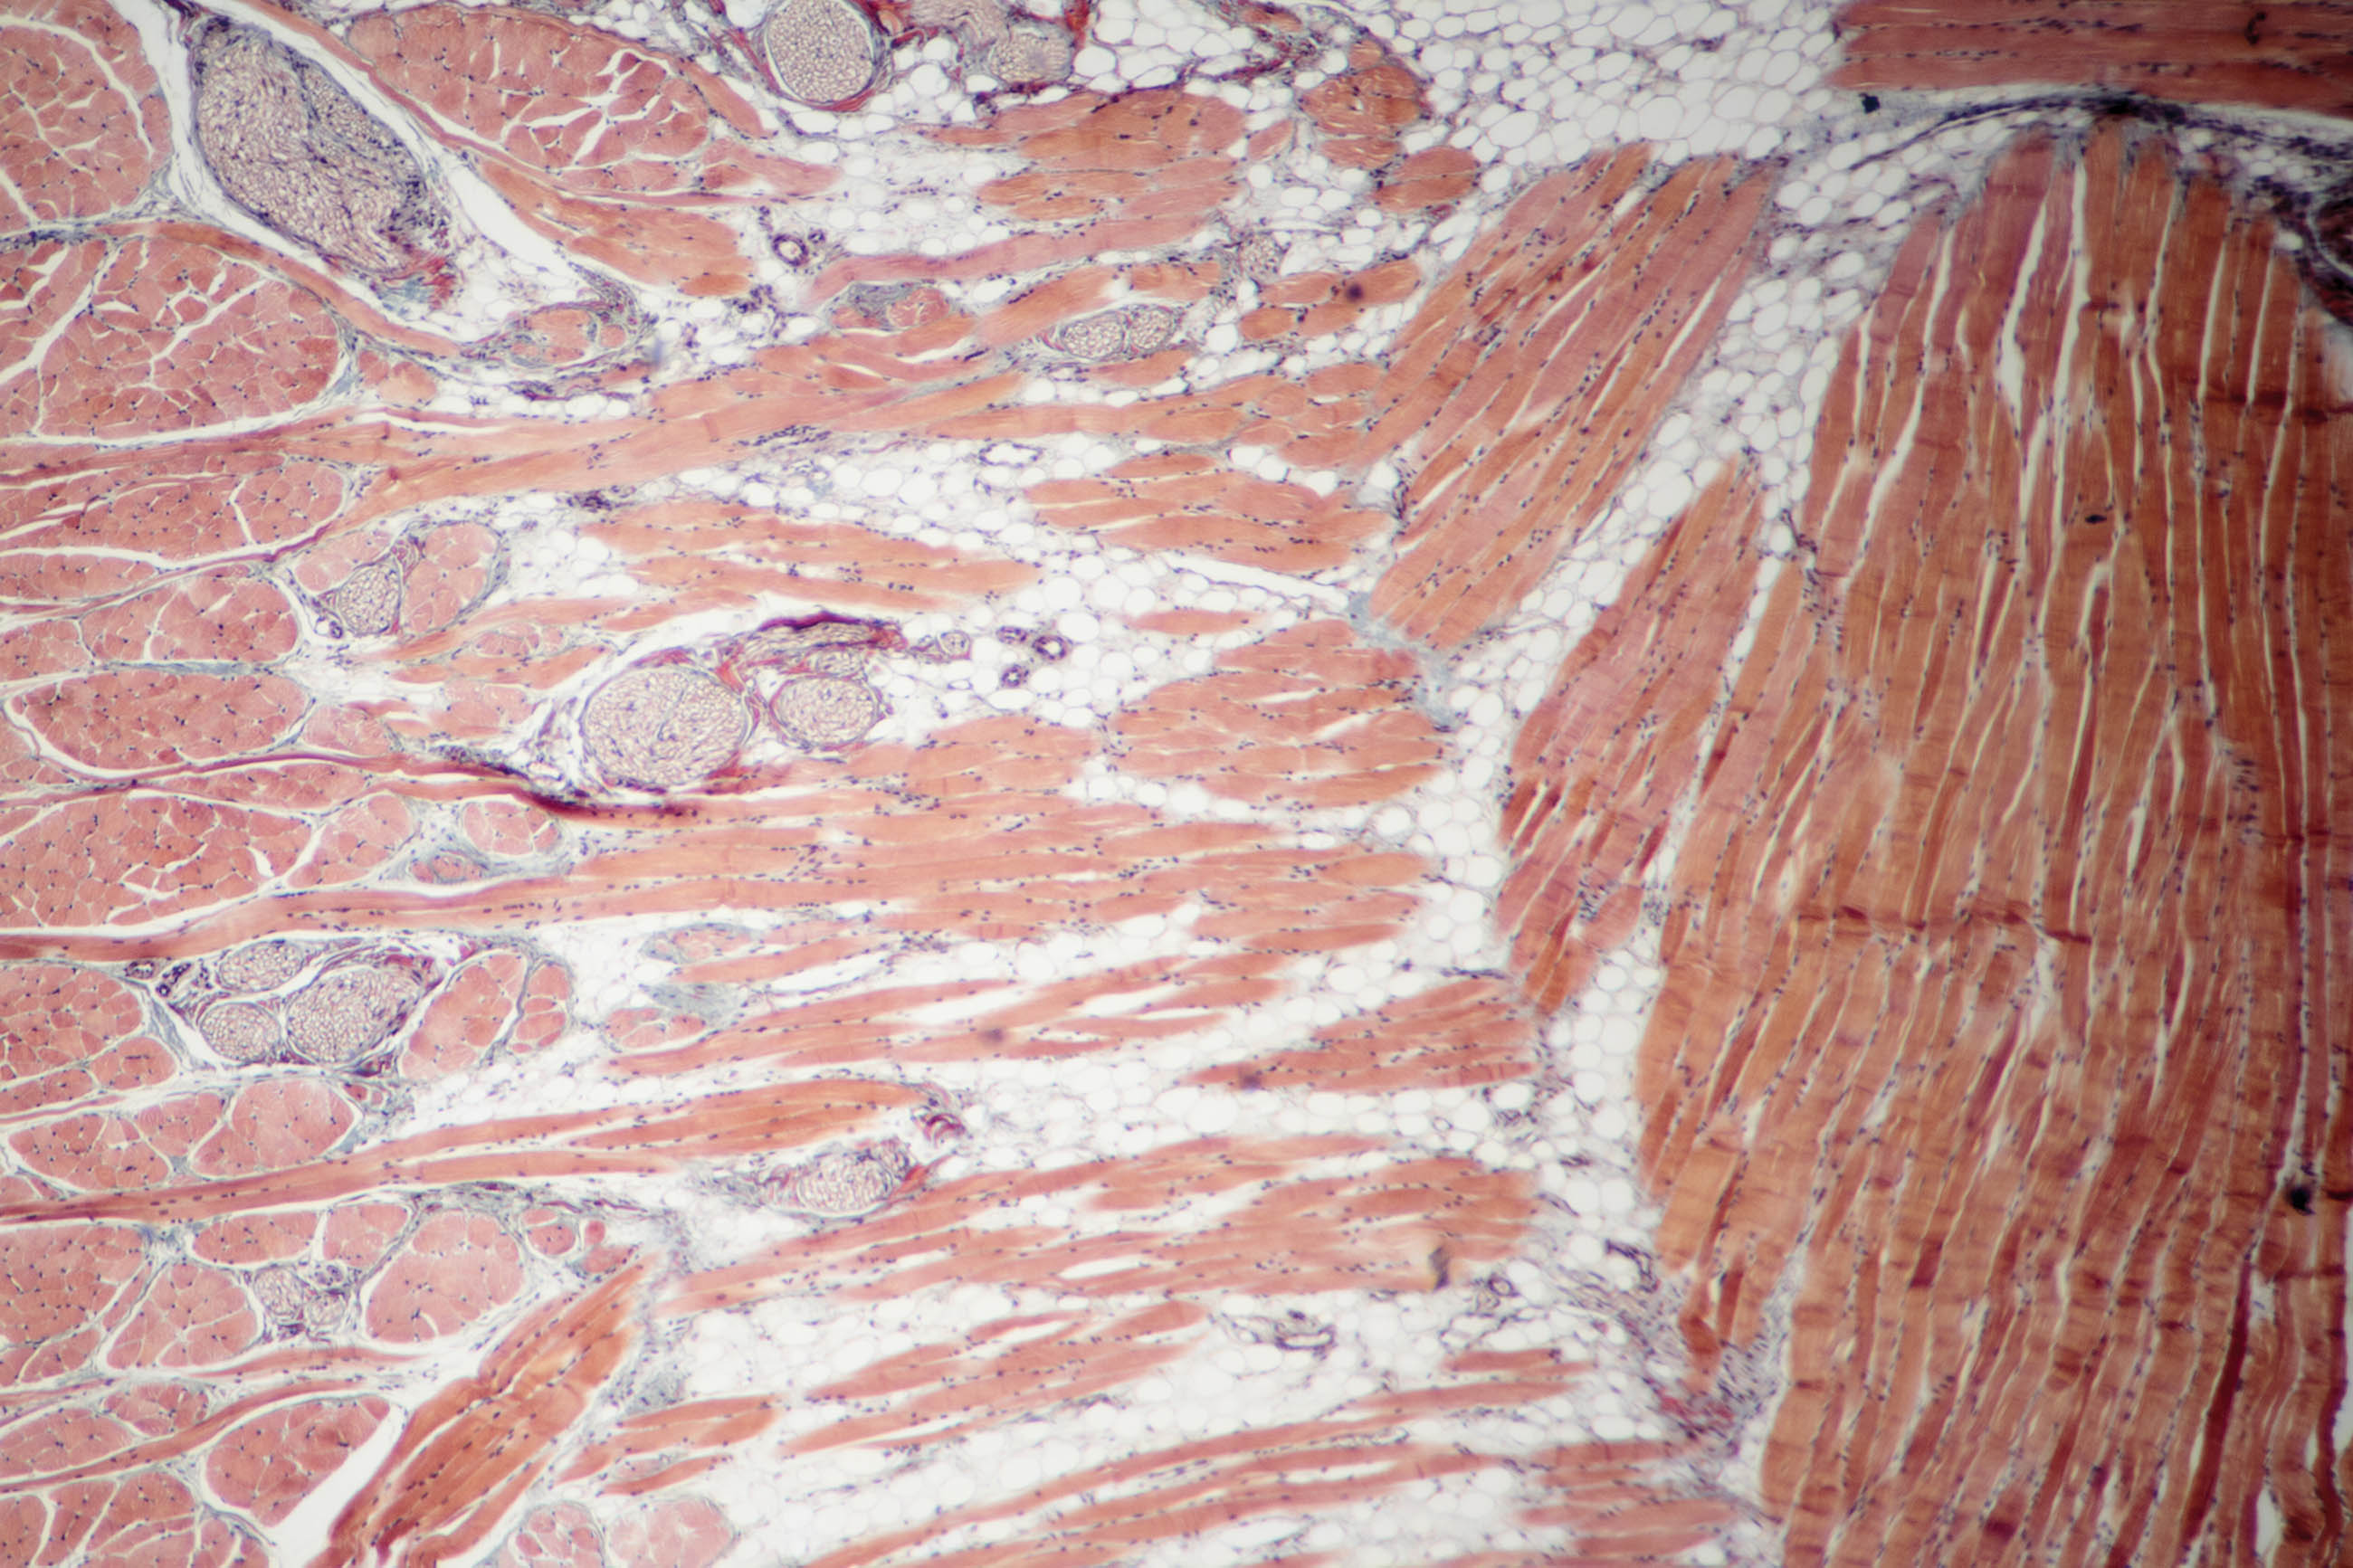 Muscle Tissue Texture, Anatomy, Microscopy, University, Tissue, HQ Photo